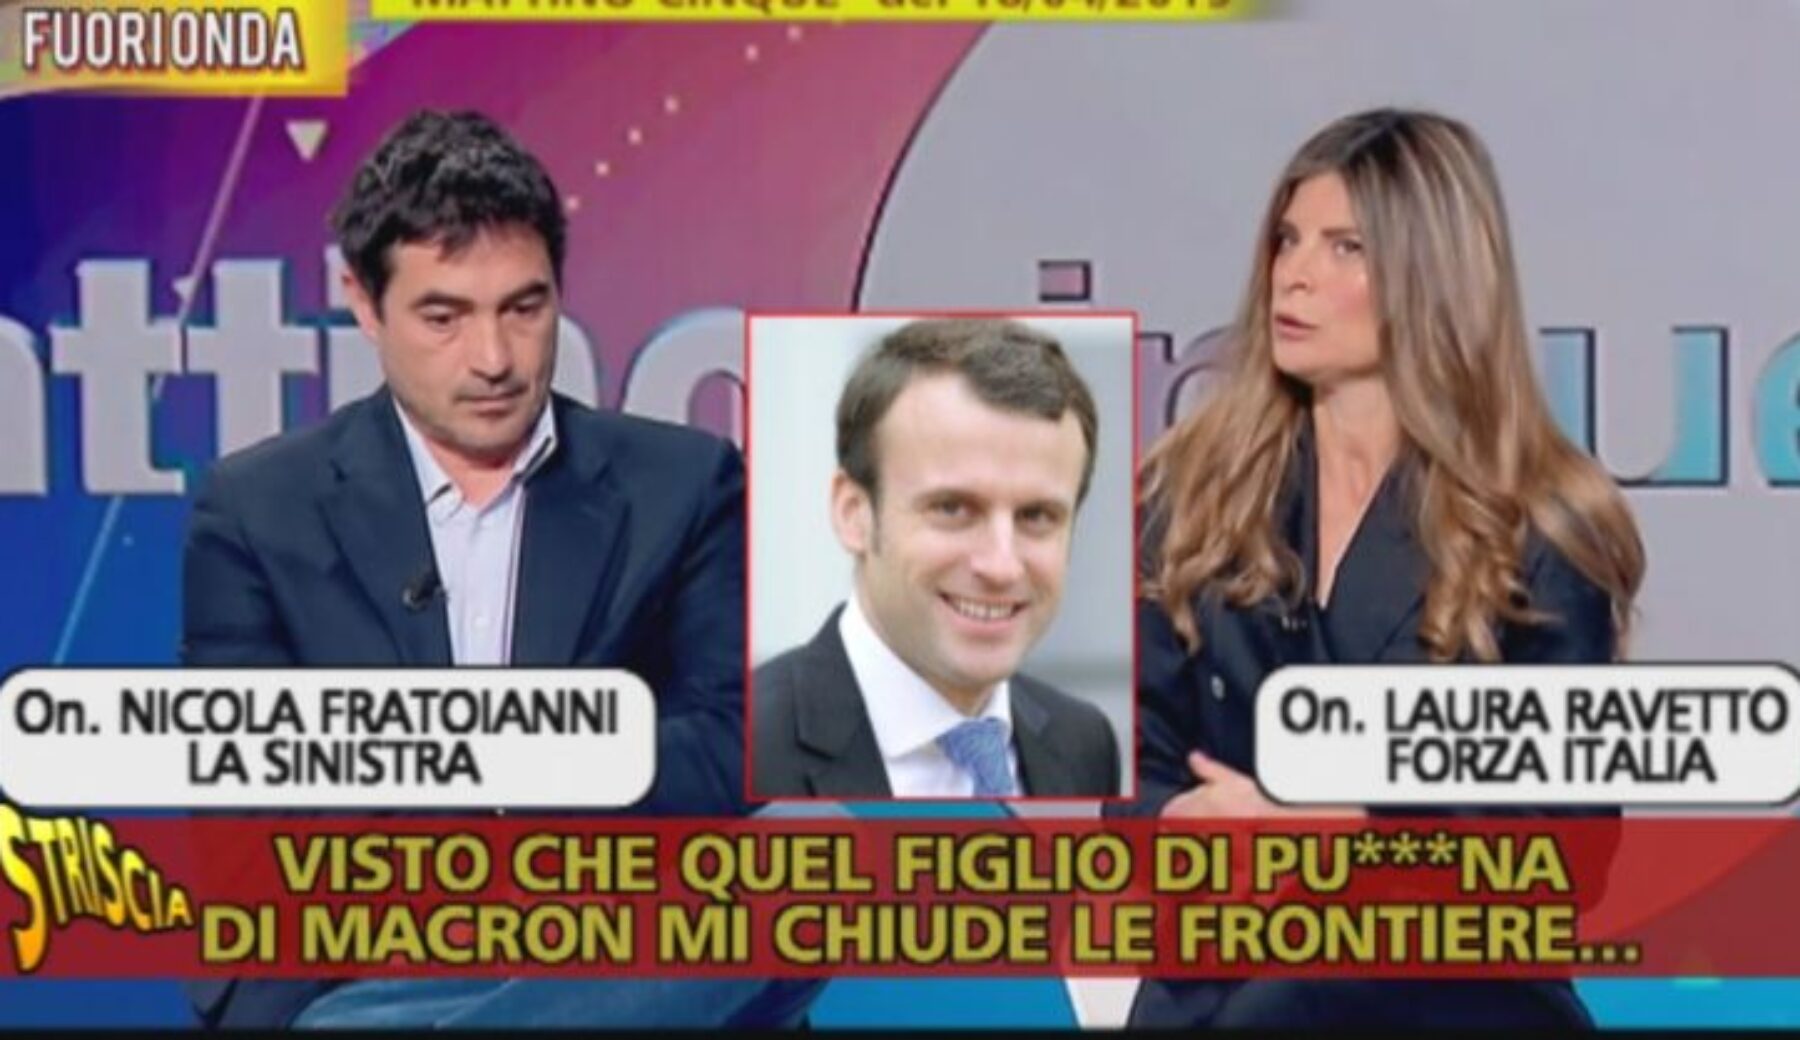 Laura Ravetto, clamoroso fuorionda sul presidente francese Macron